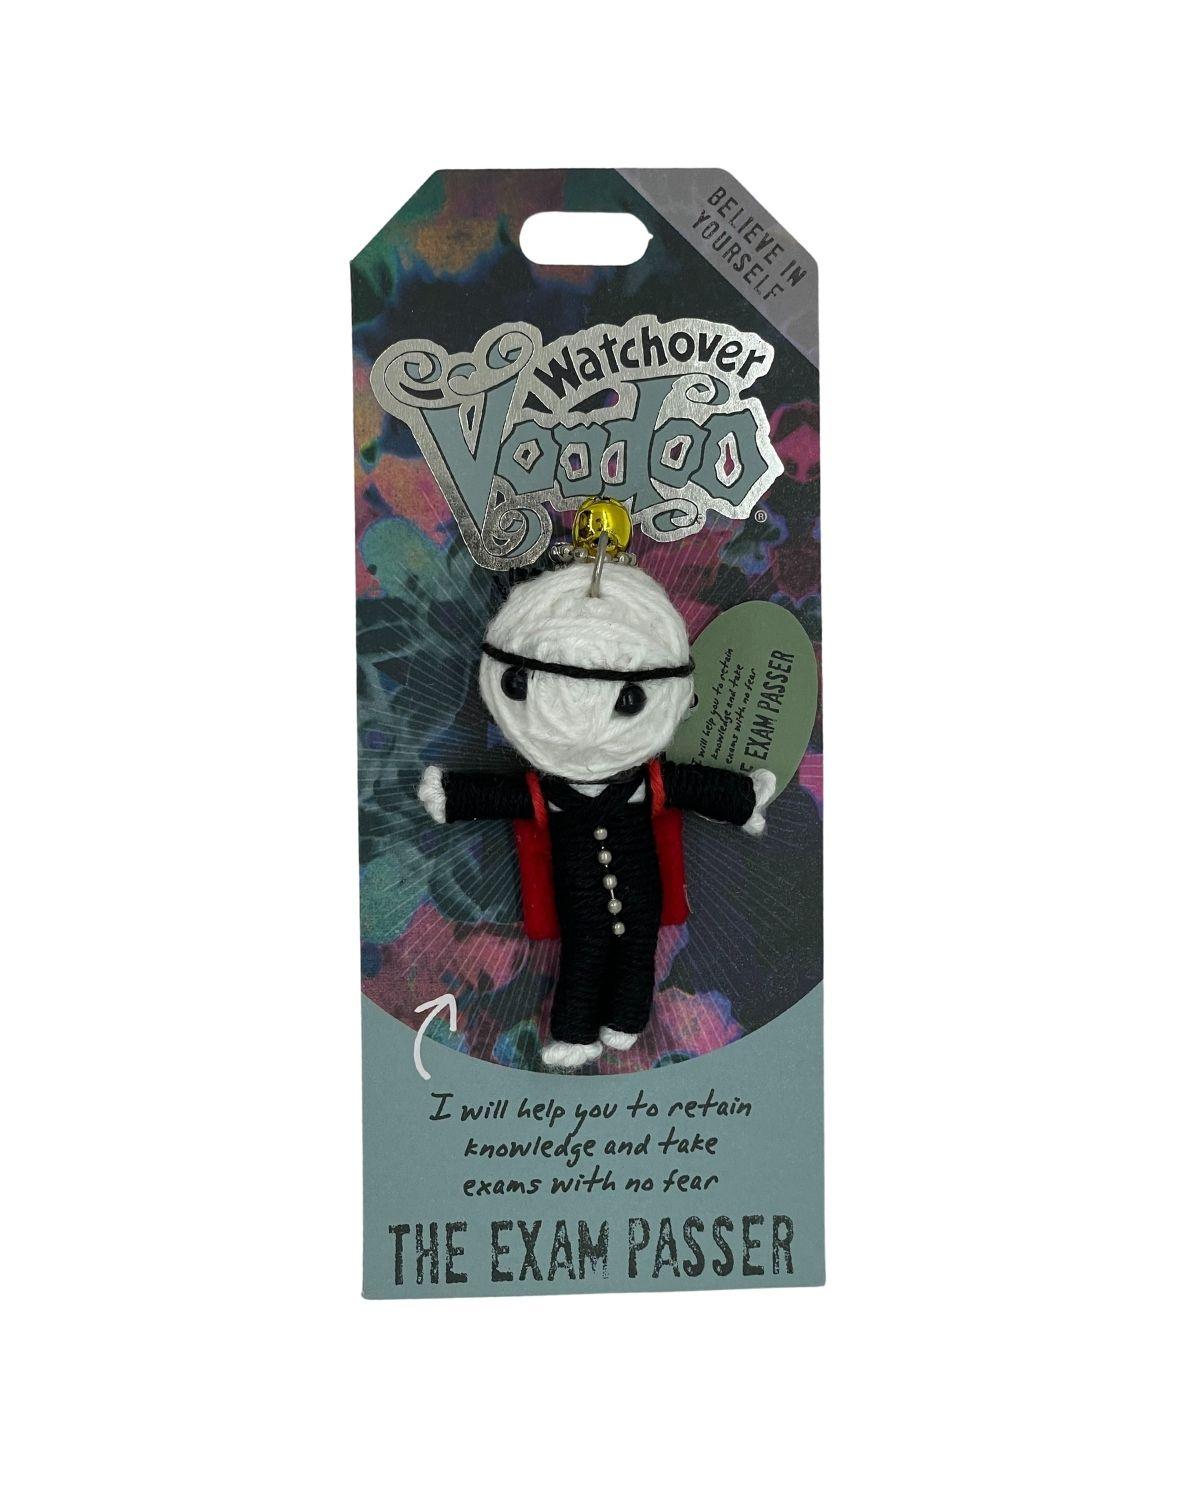 Watchover Voodoo Doll - The Exam Passer - Watchover Voodoo - String Doll